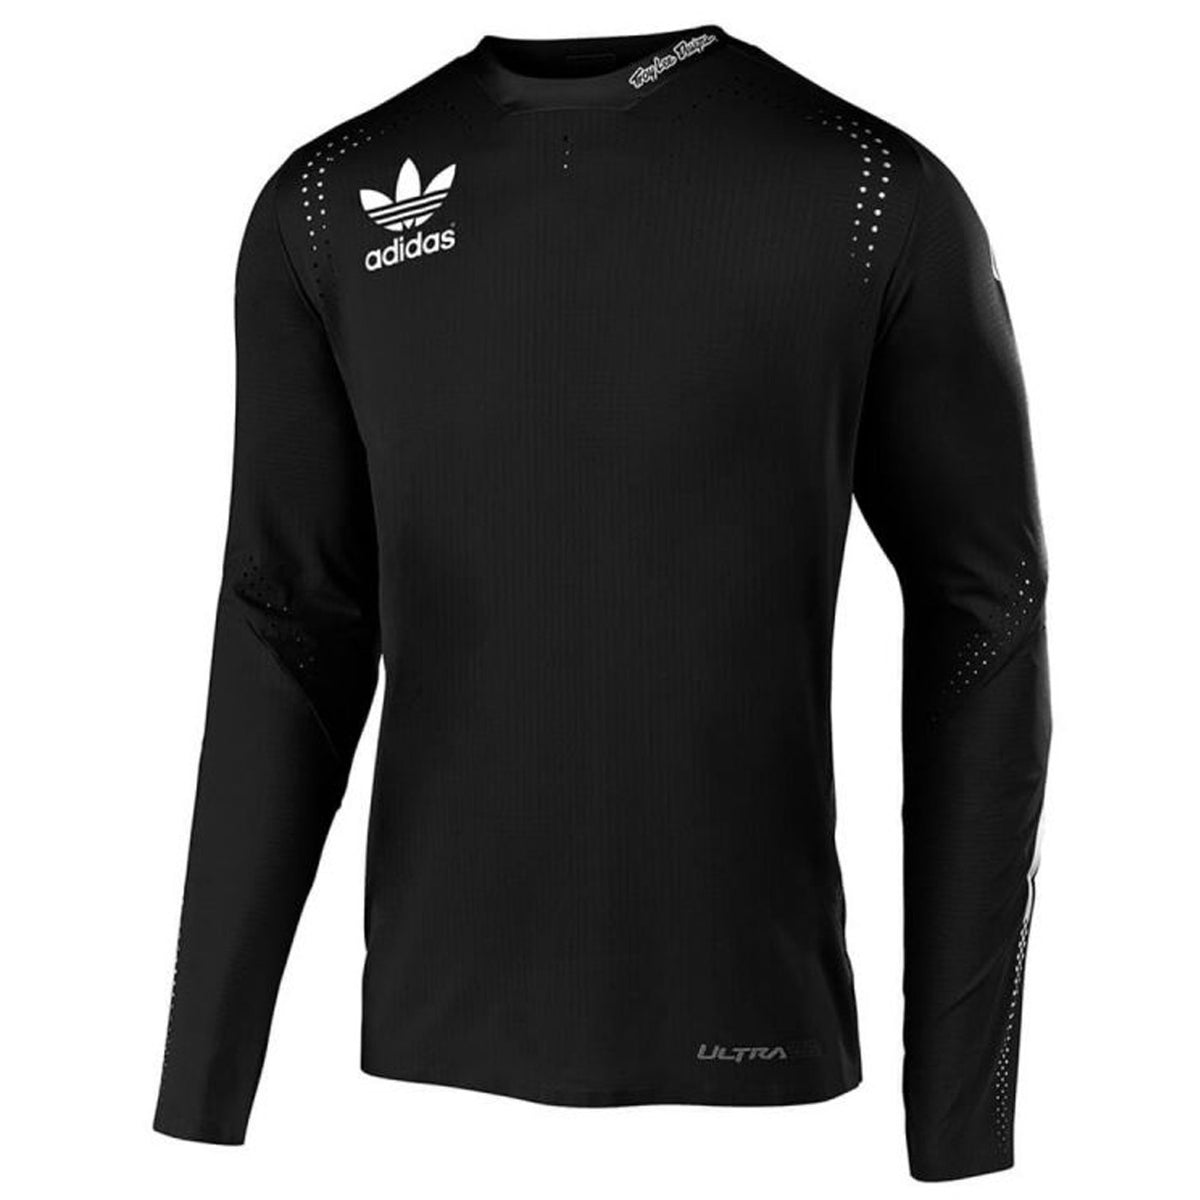 Troy Lee Adidas LTD long jersey - Black – All4cycling